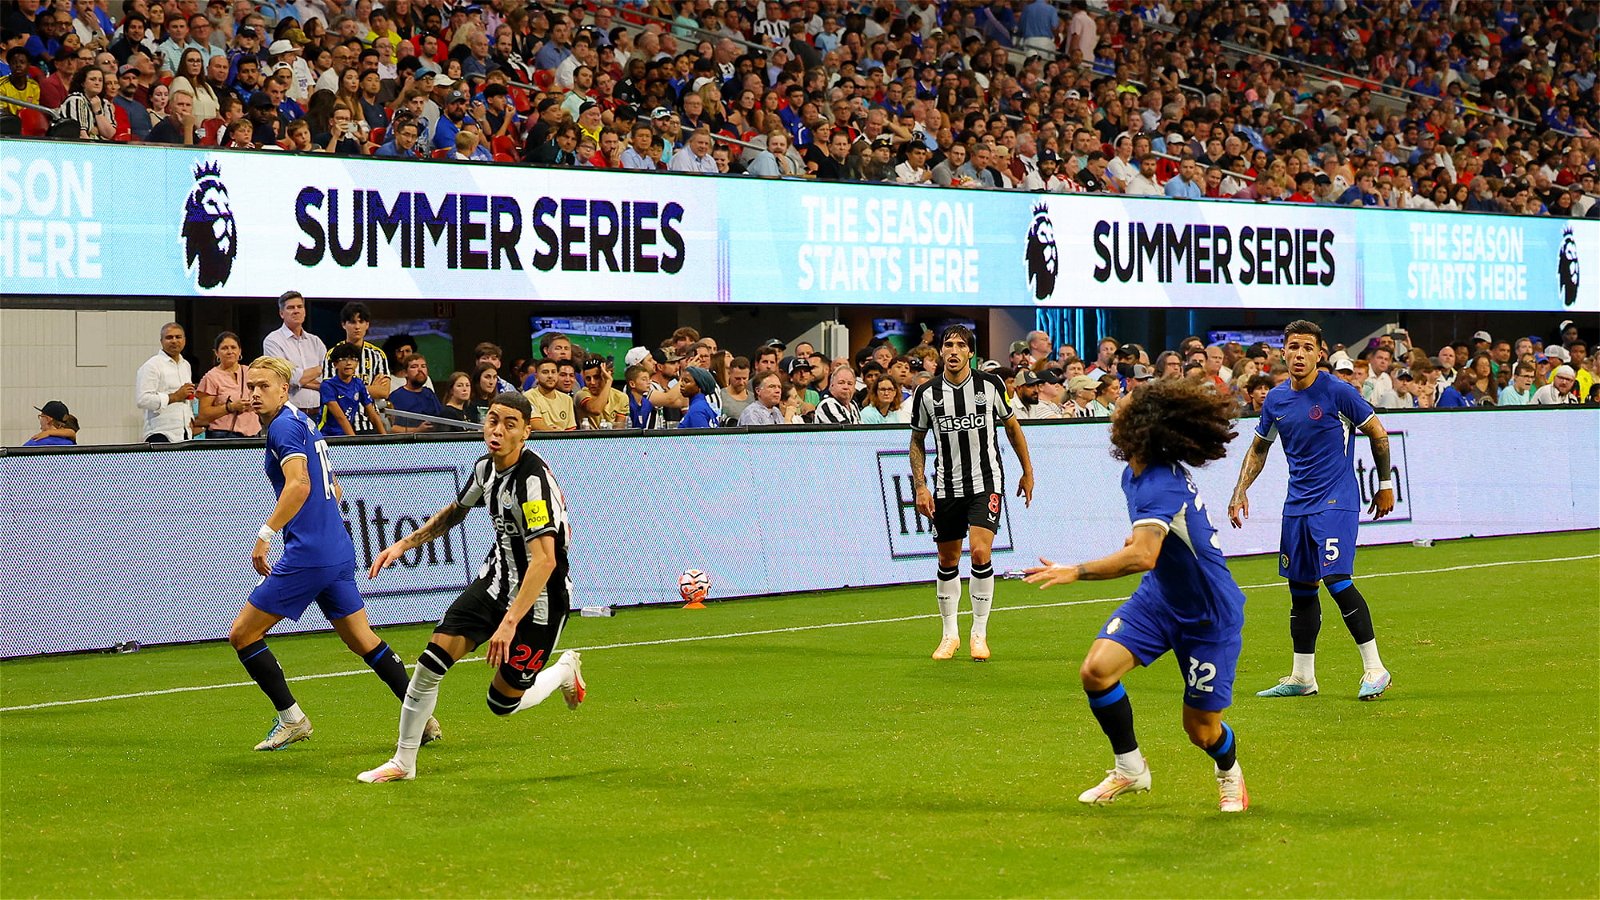 Chelsea vs Newcastle in the Premier League Summer Series